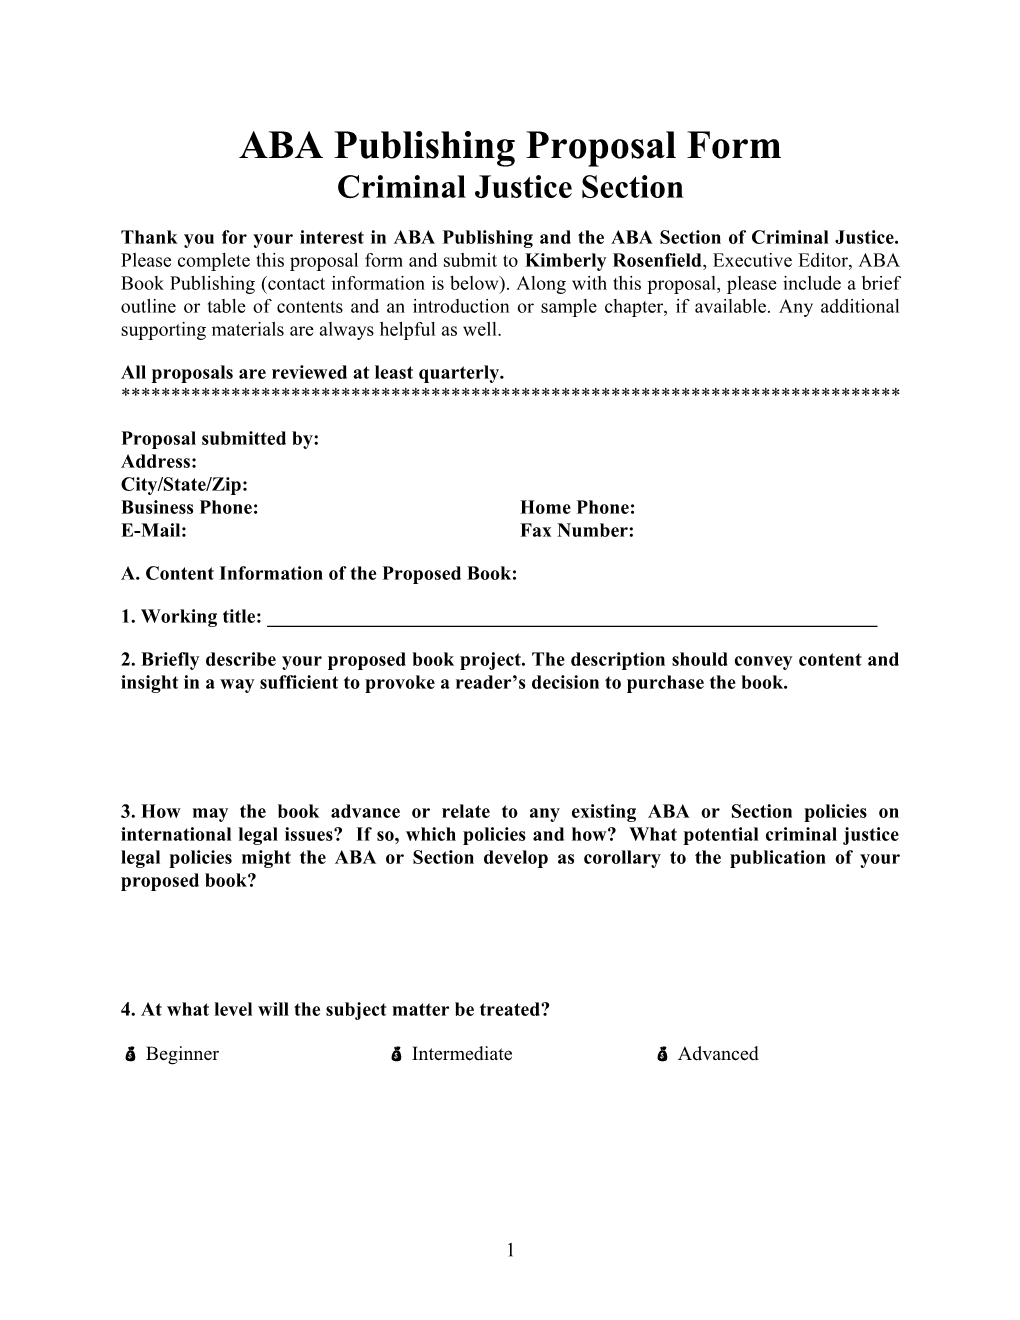 ABA Publishing Proposal Form Criminal Justice Section